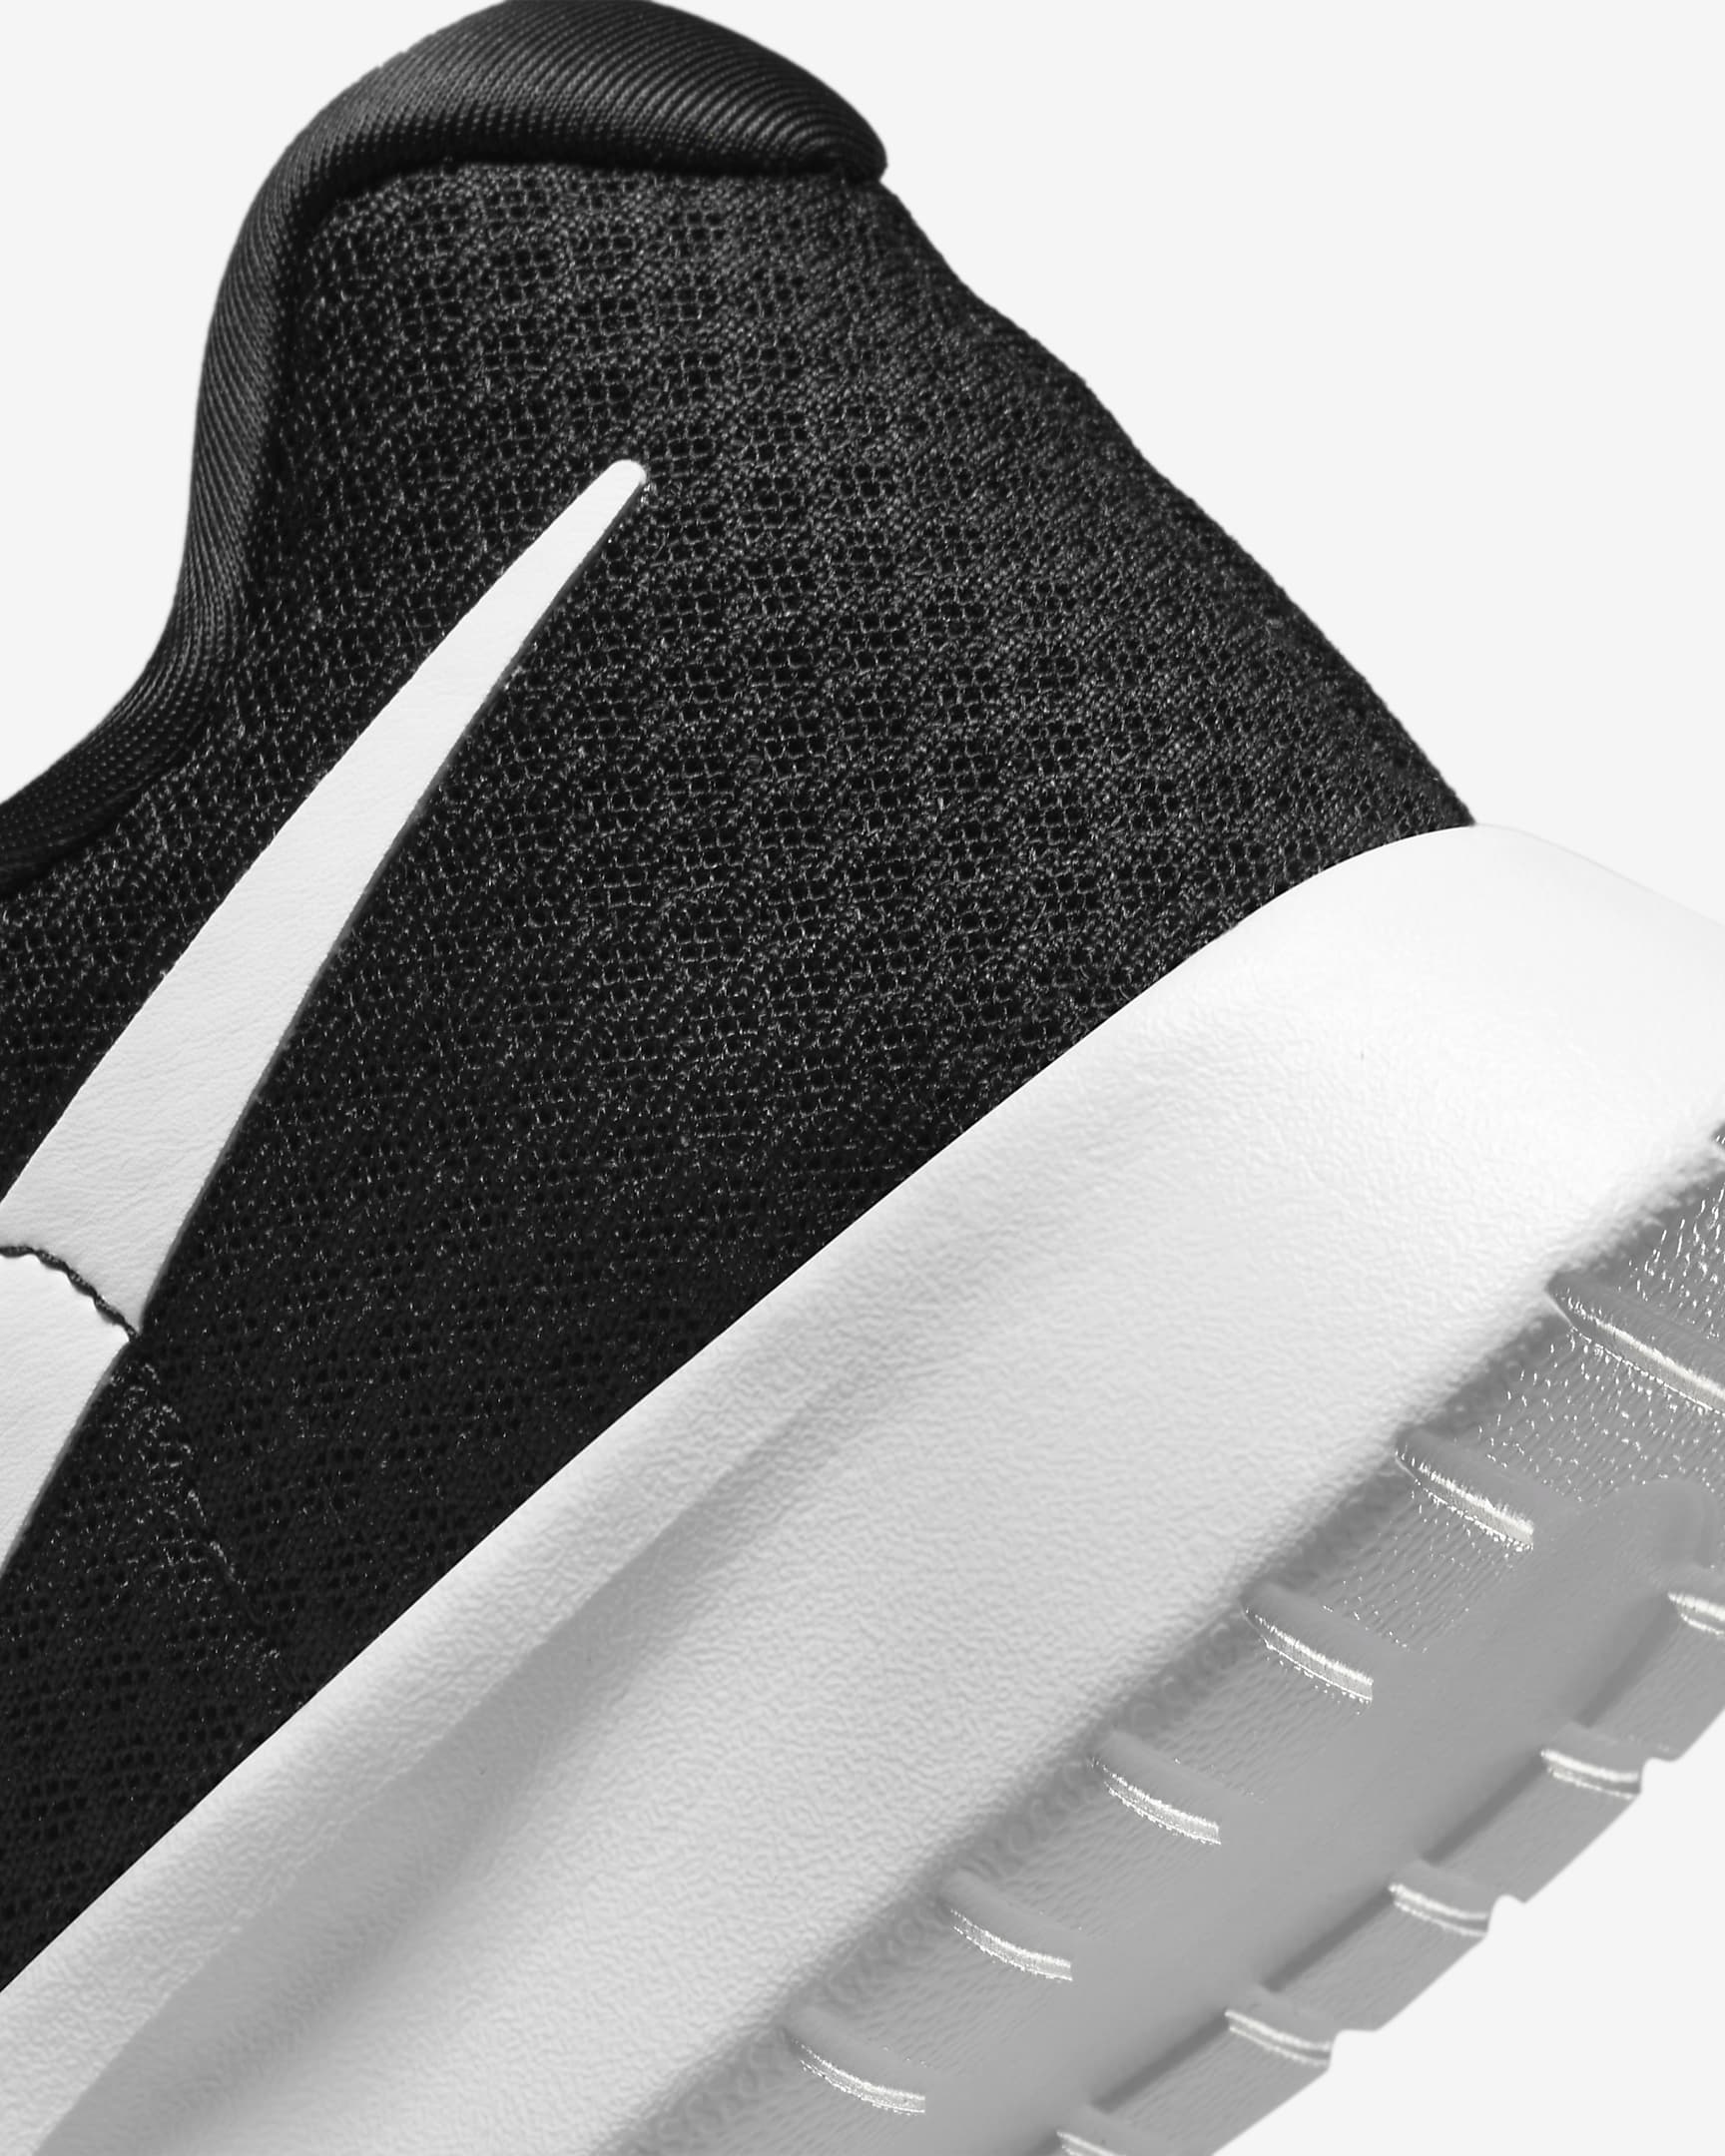 Chaussure Nike Tanjun EasyOn pour femme - Noir/Volt/Noir/Blanc